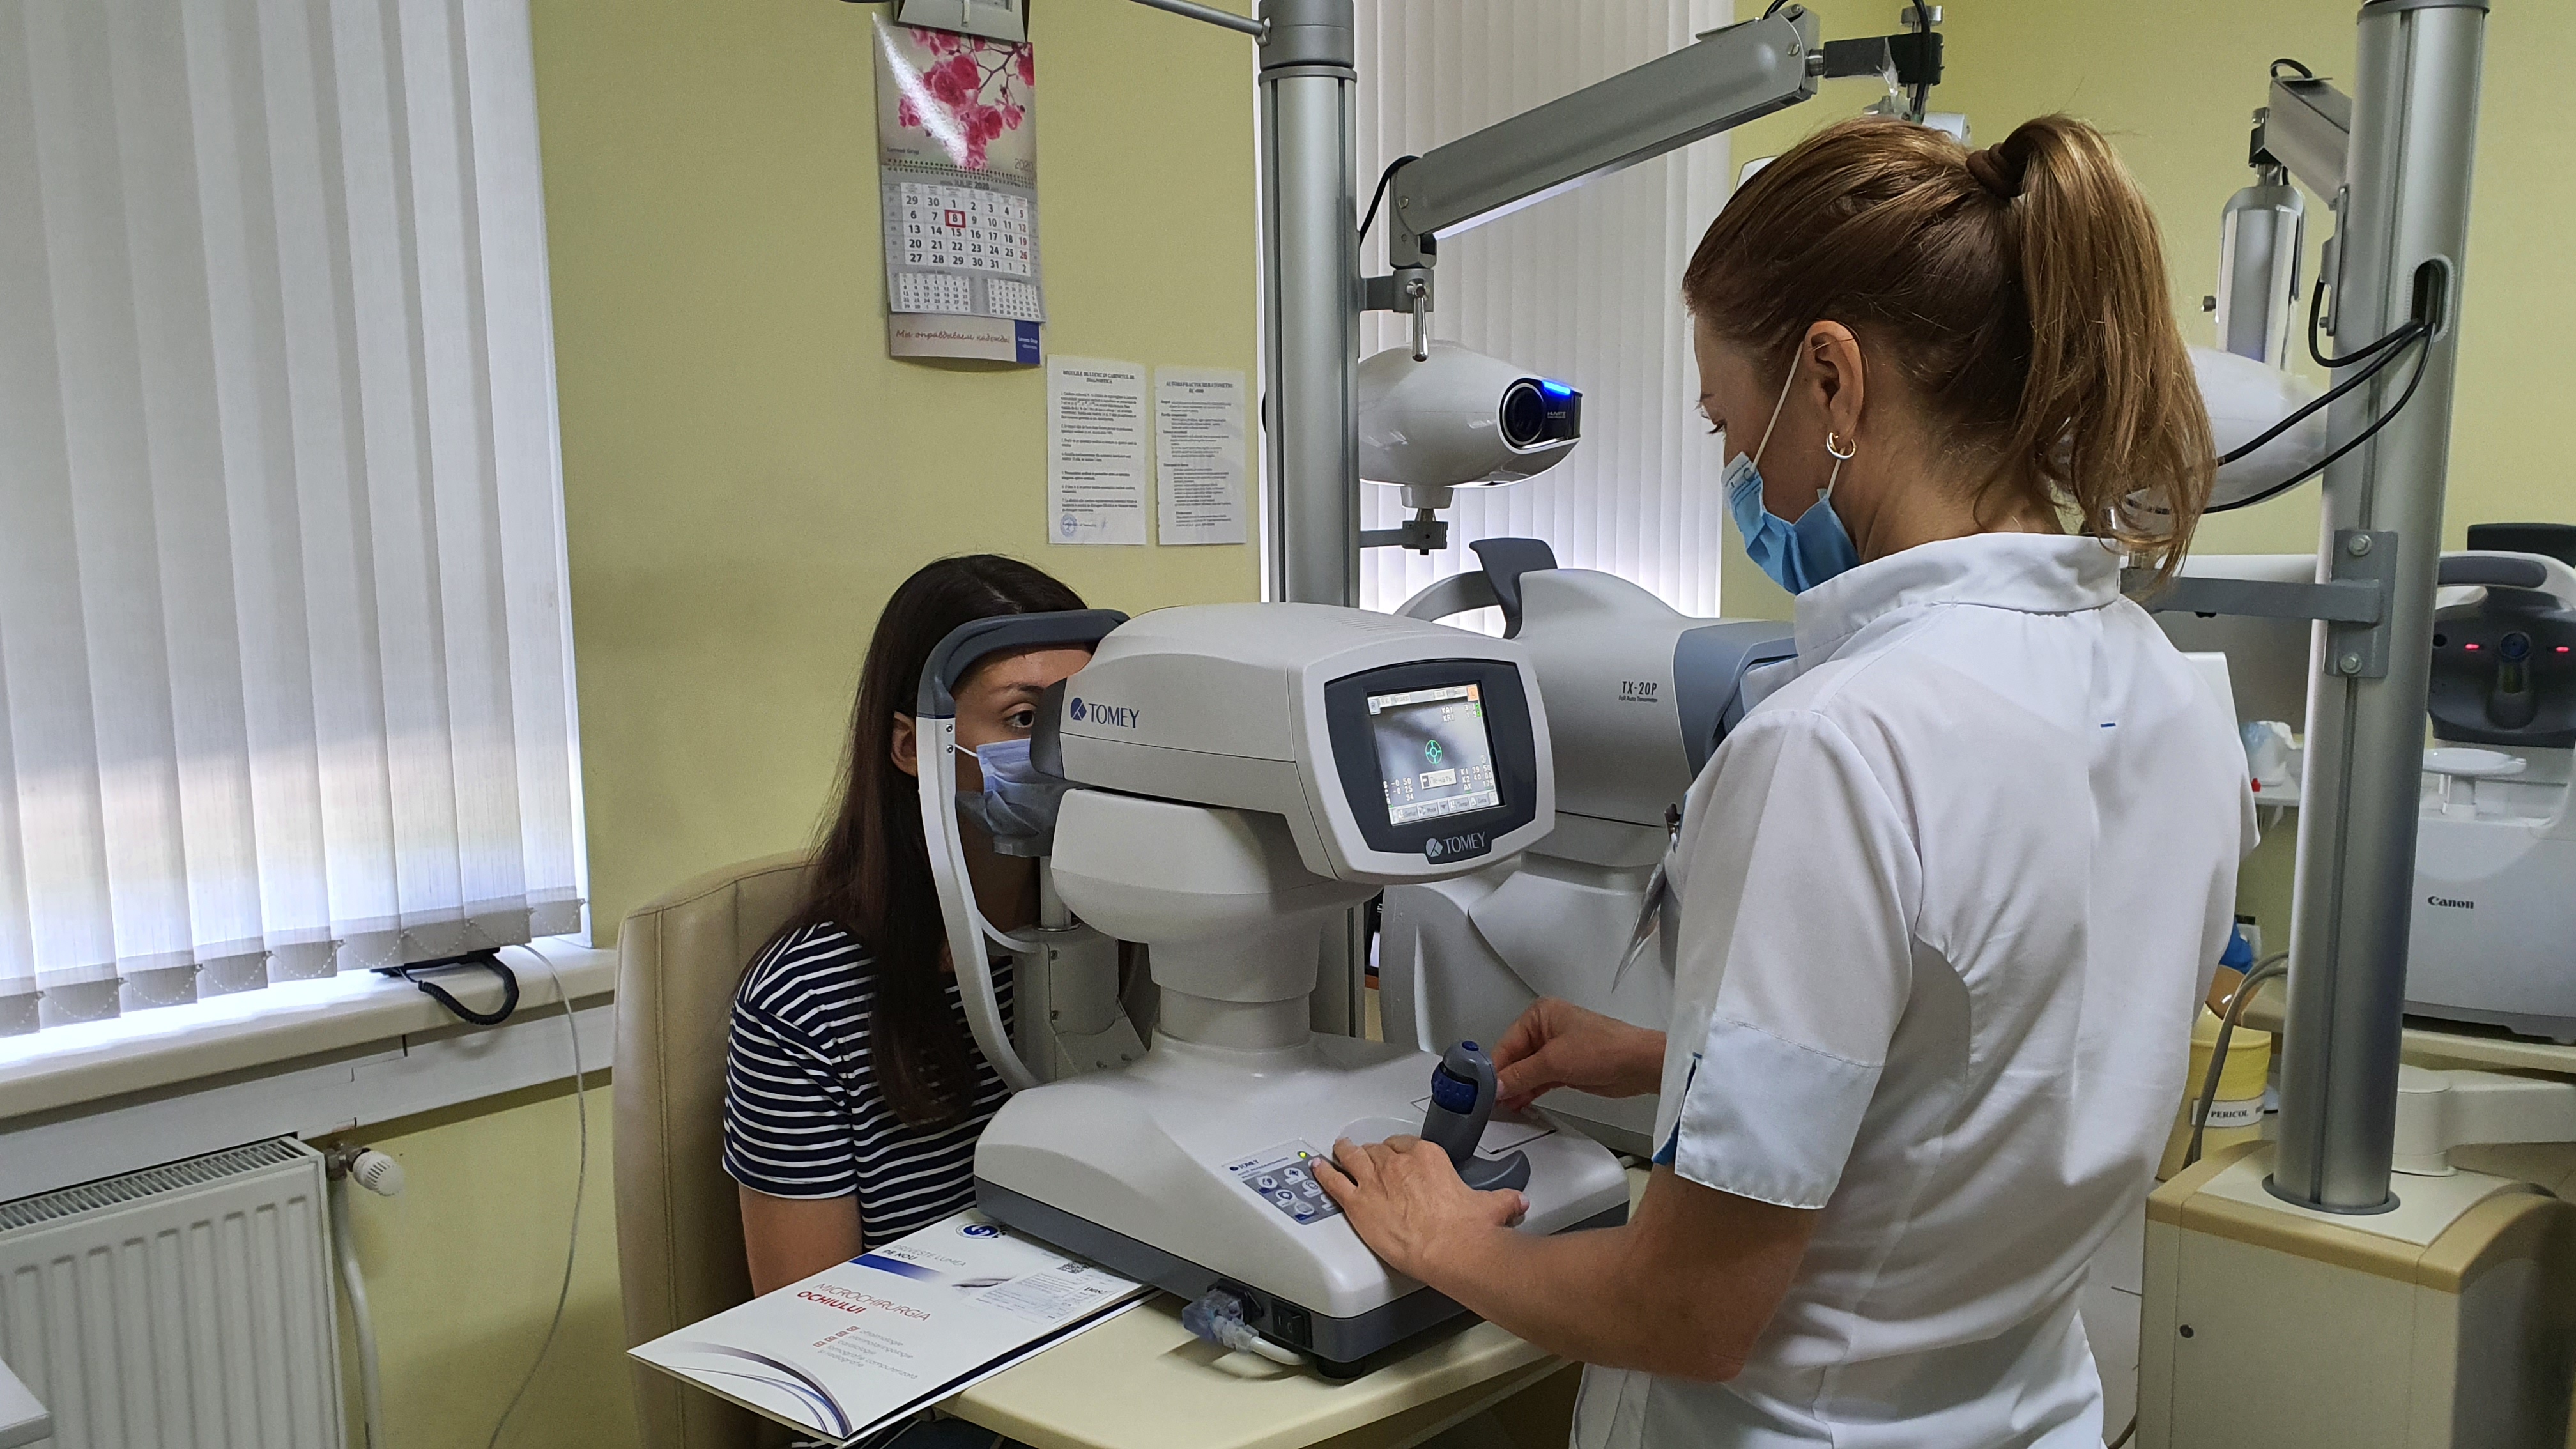 Examinarea ochiului in glaucom - metoda digitala, instrumentala